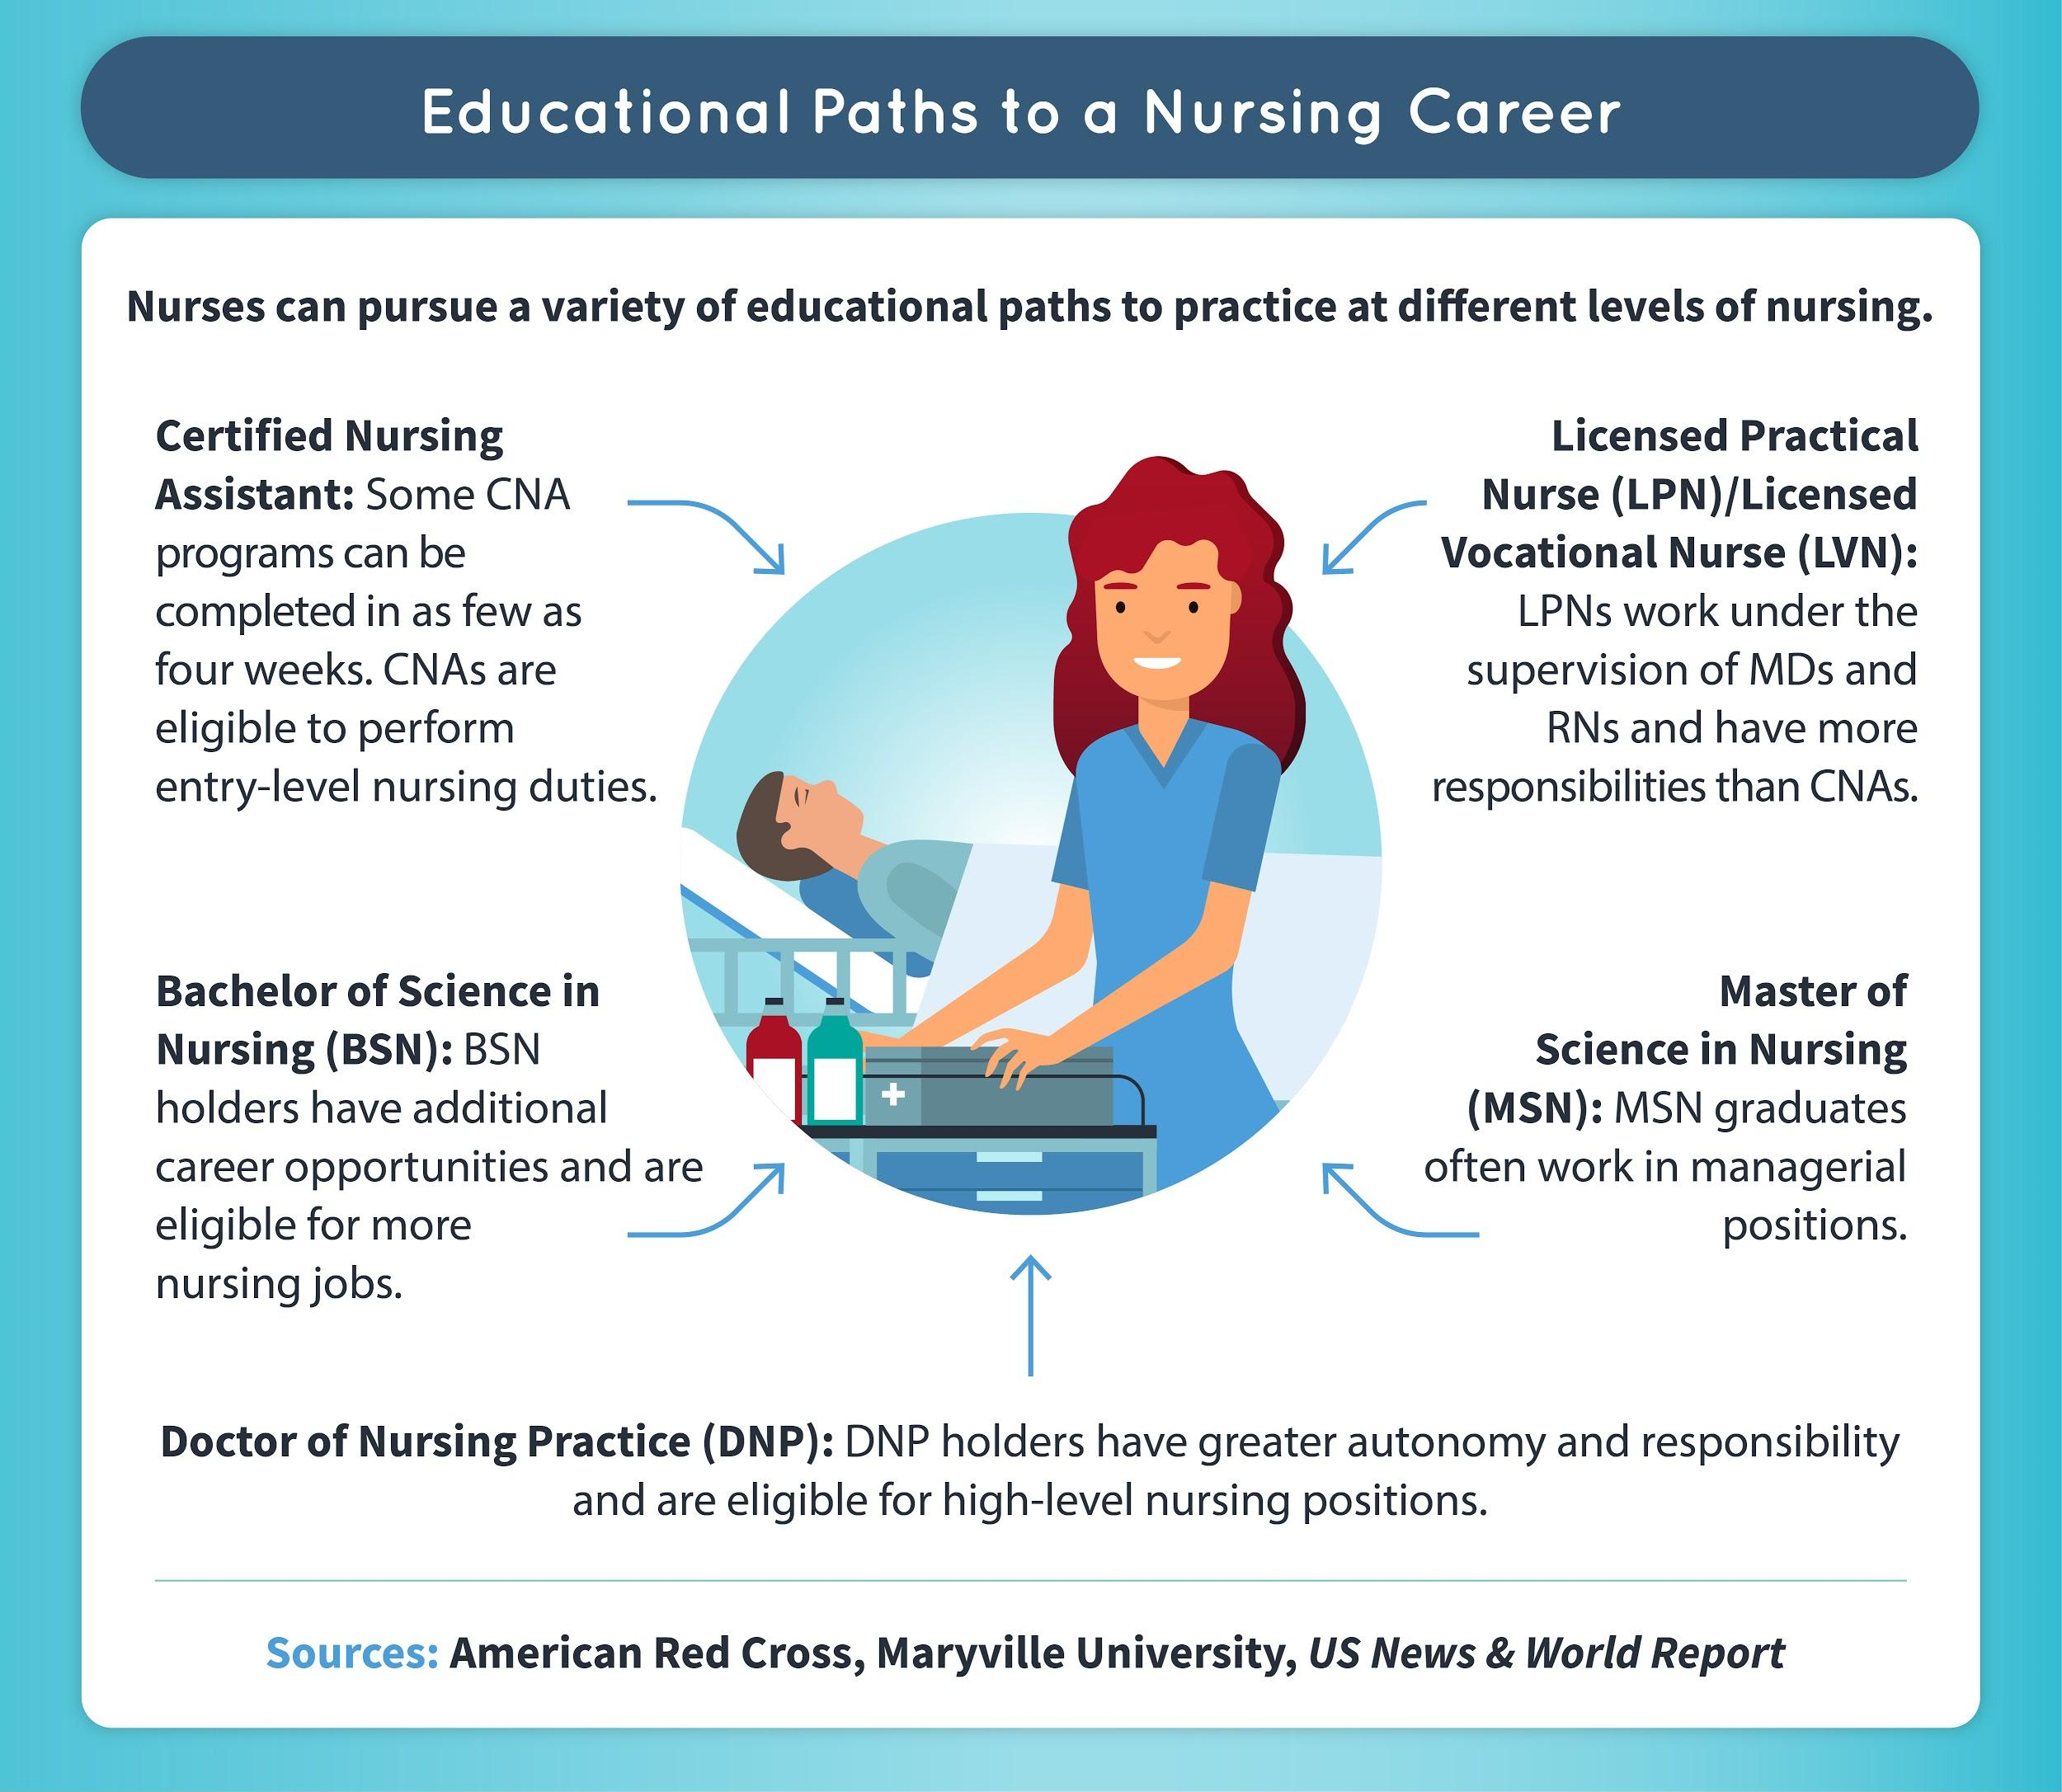 Nursing Prerequisites, Skills & Tools to Become a Nurse